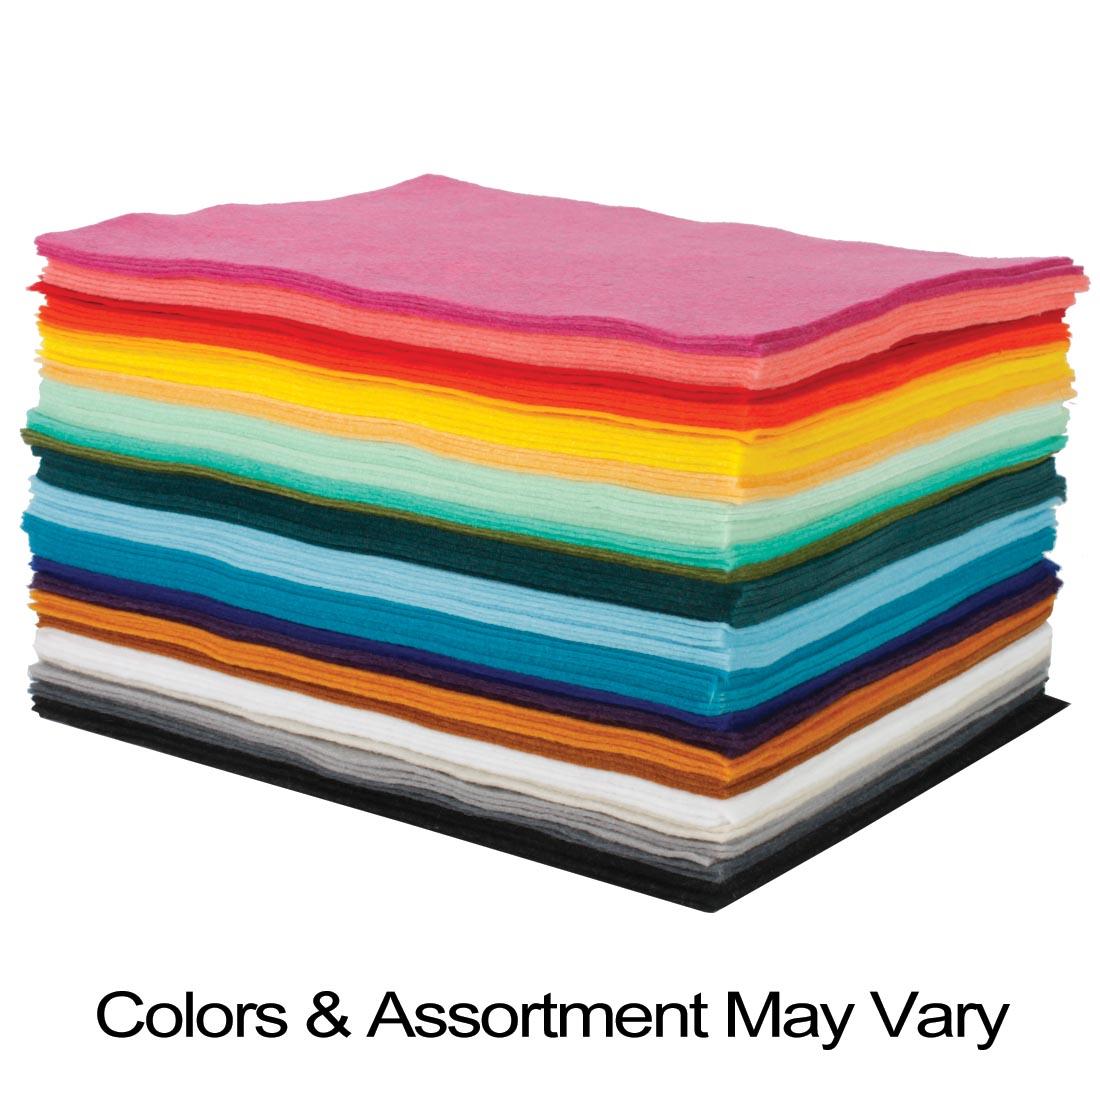 100 craft felt sheets in an assortment of colors